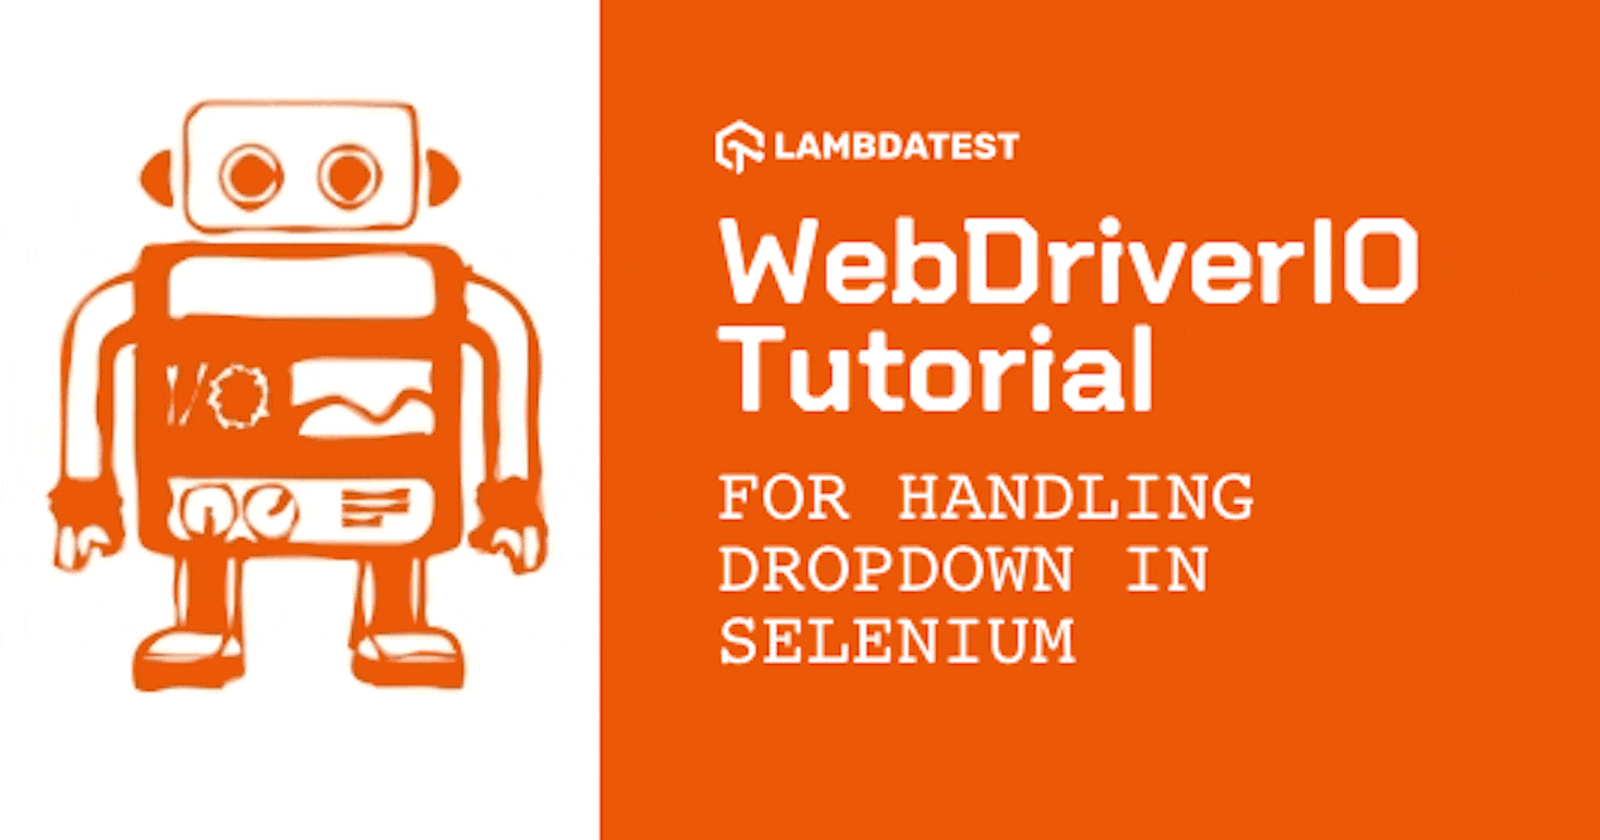 WebDriverIO Tutorial For Handling Dropdown In Selenium